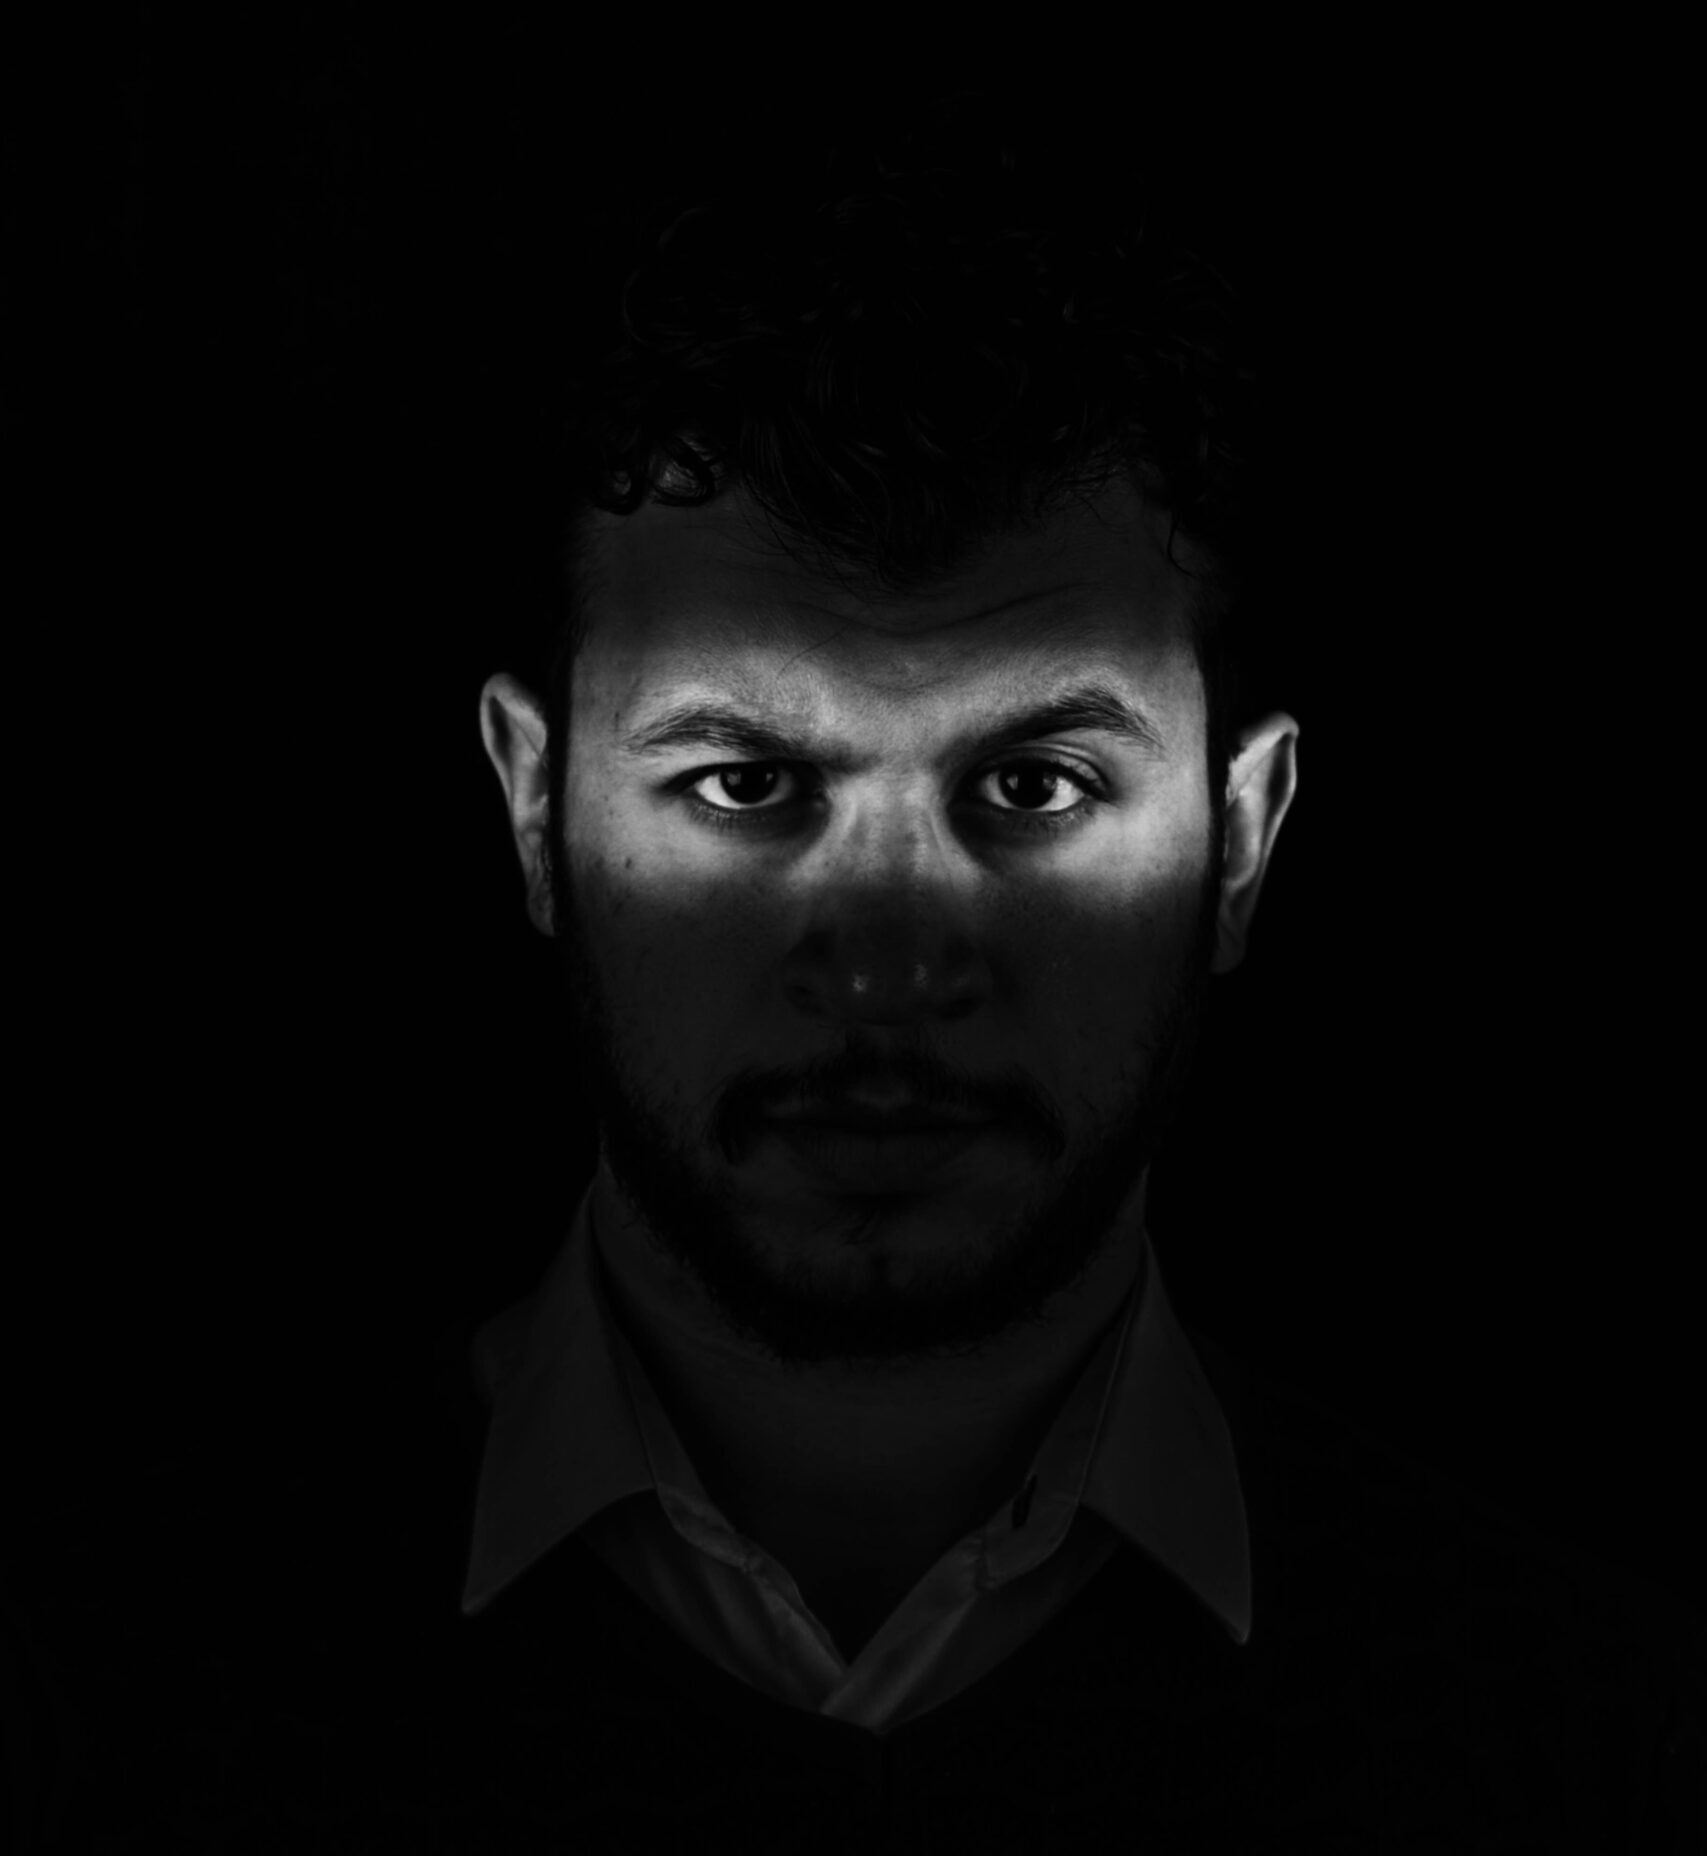 Man in dark shadow showing eyes.